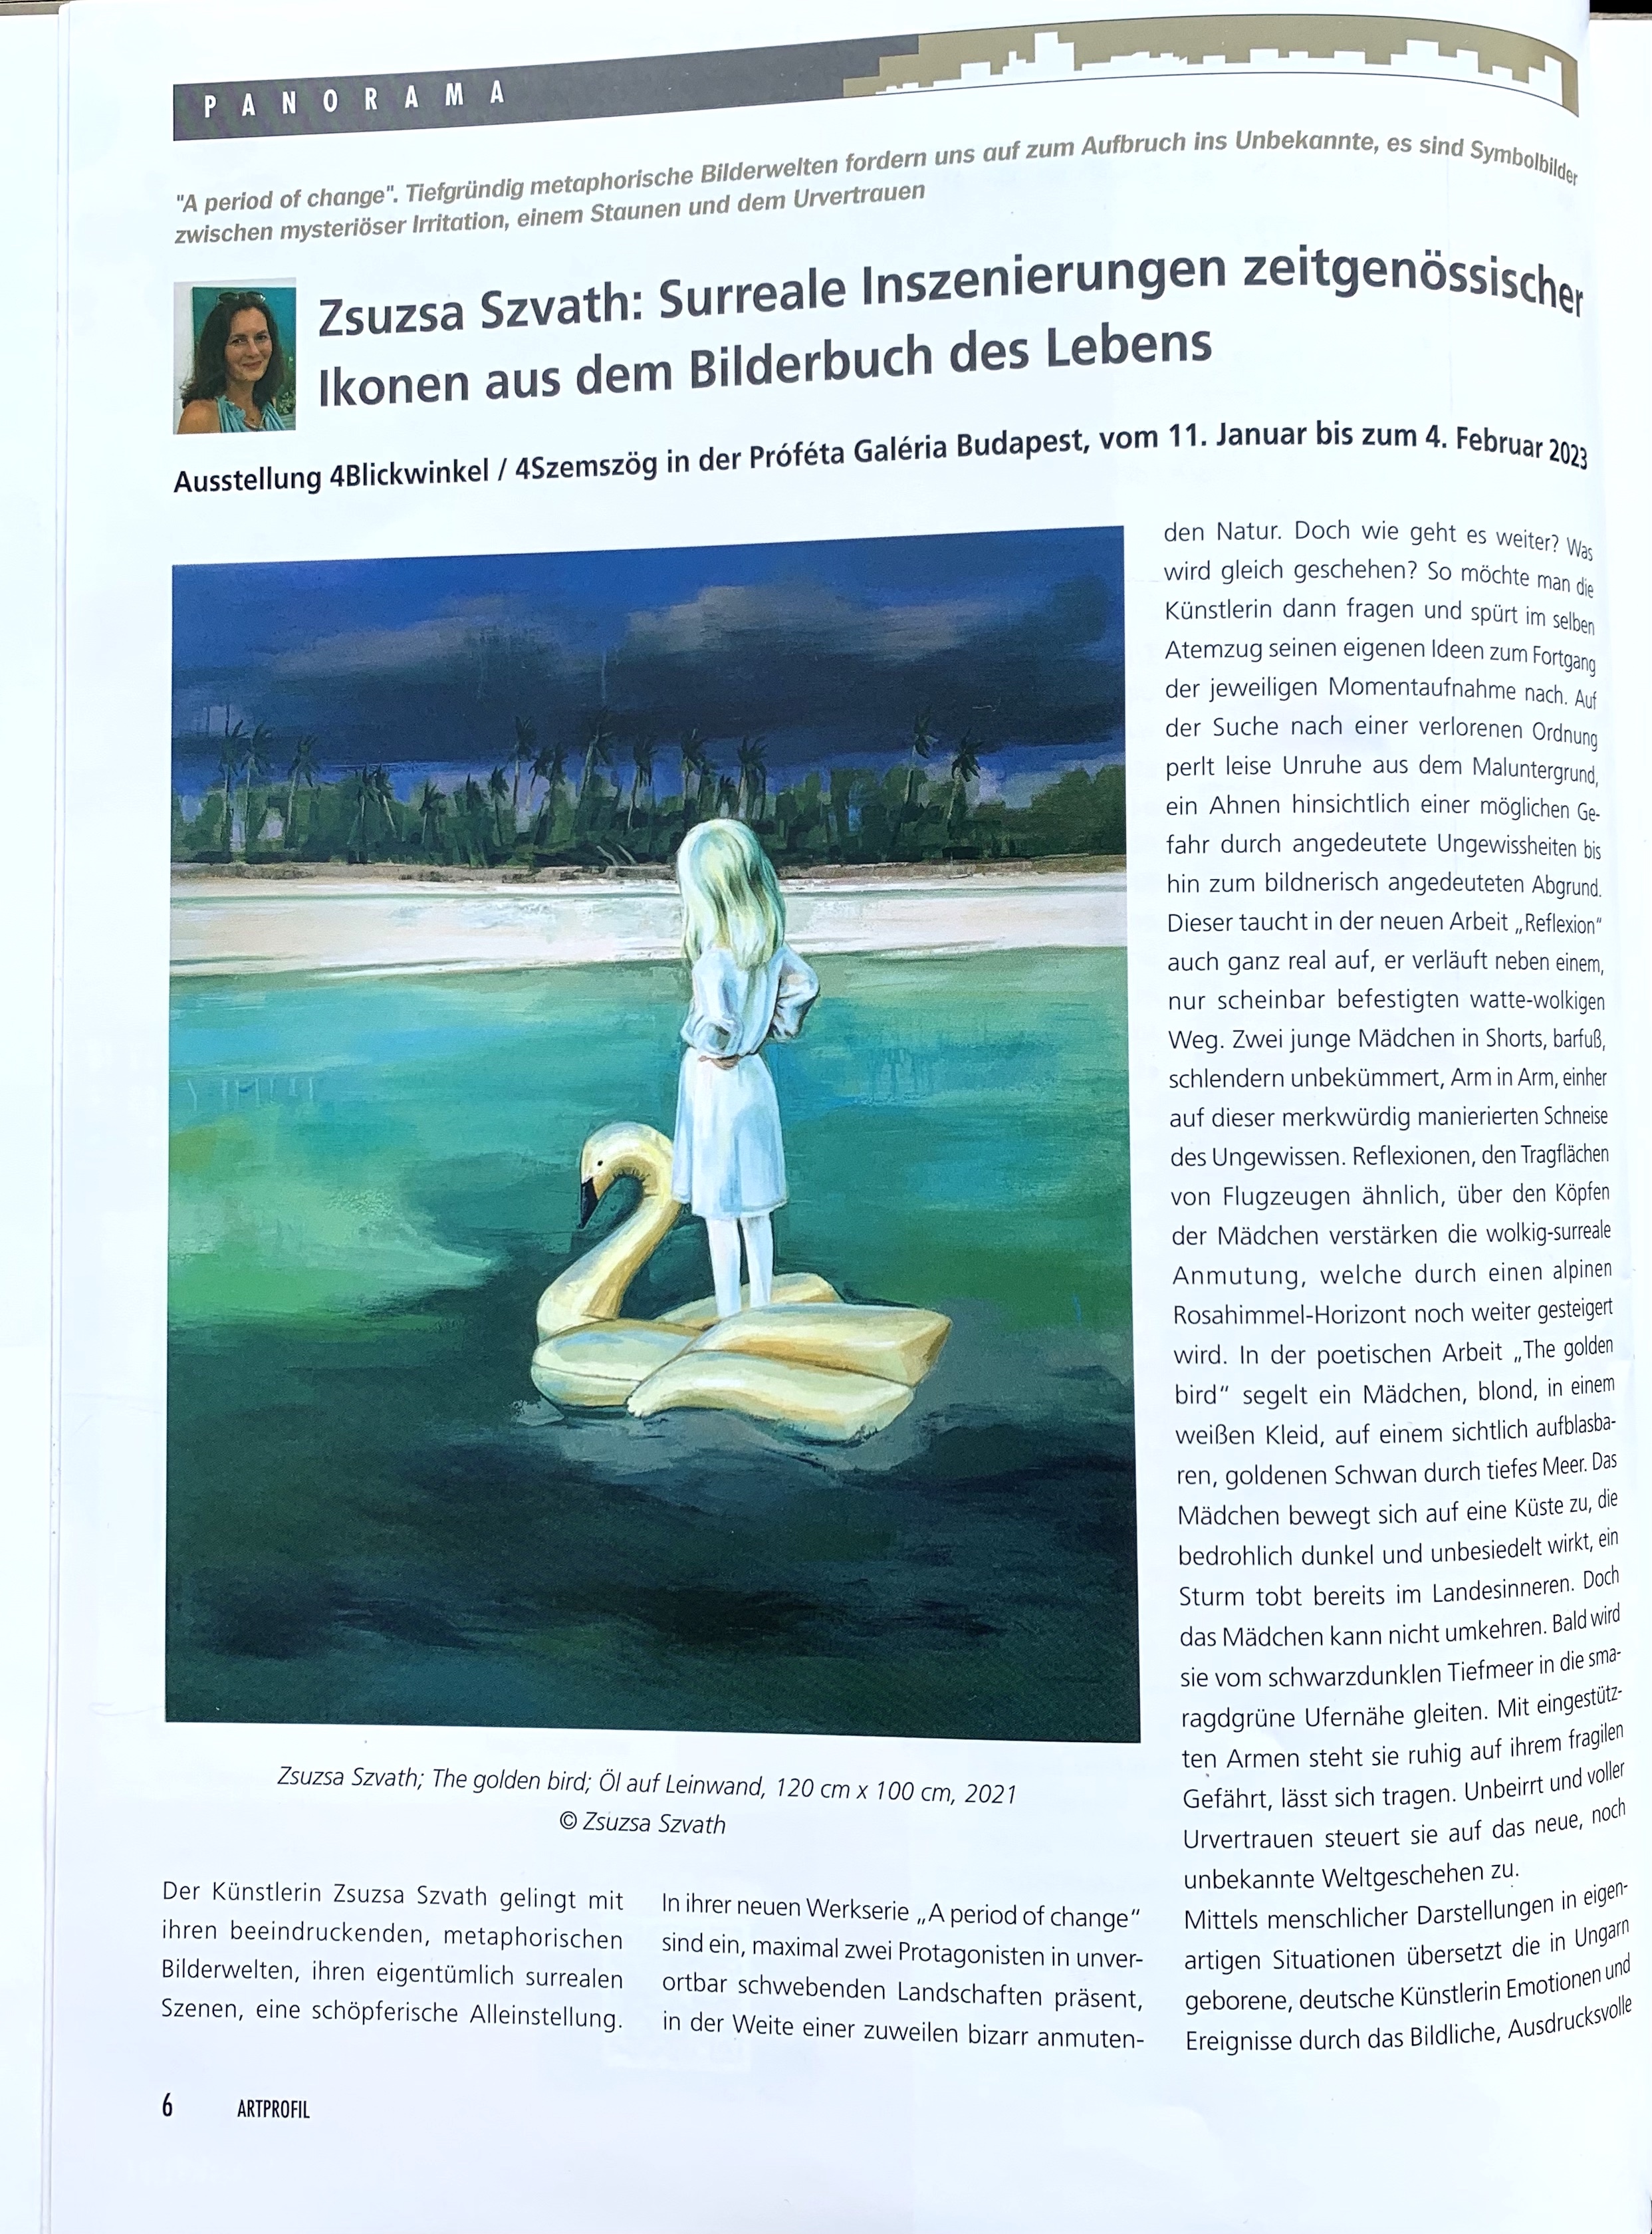 Publikation im Kunstmagazin Artprofil